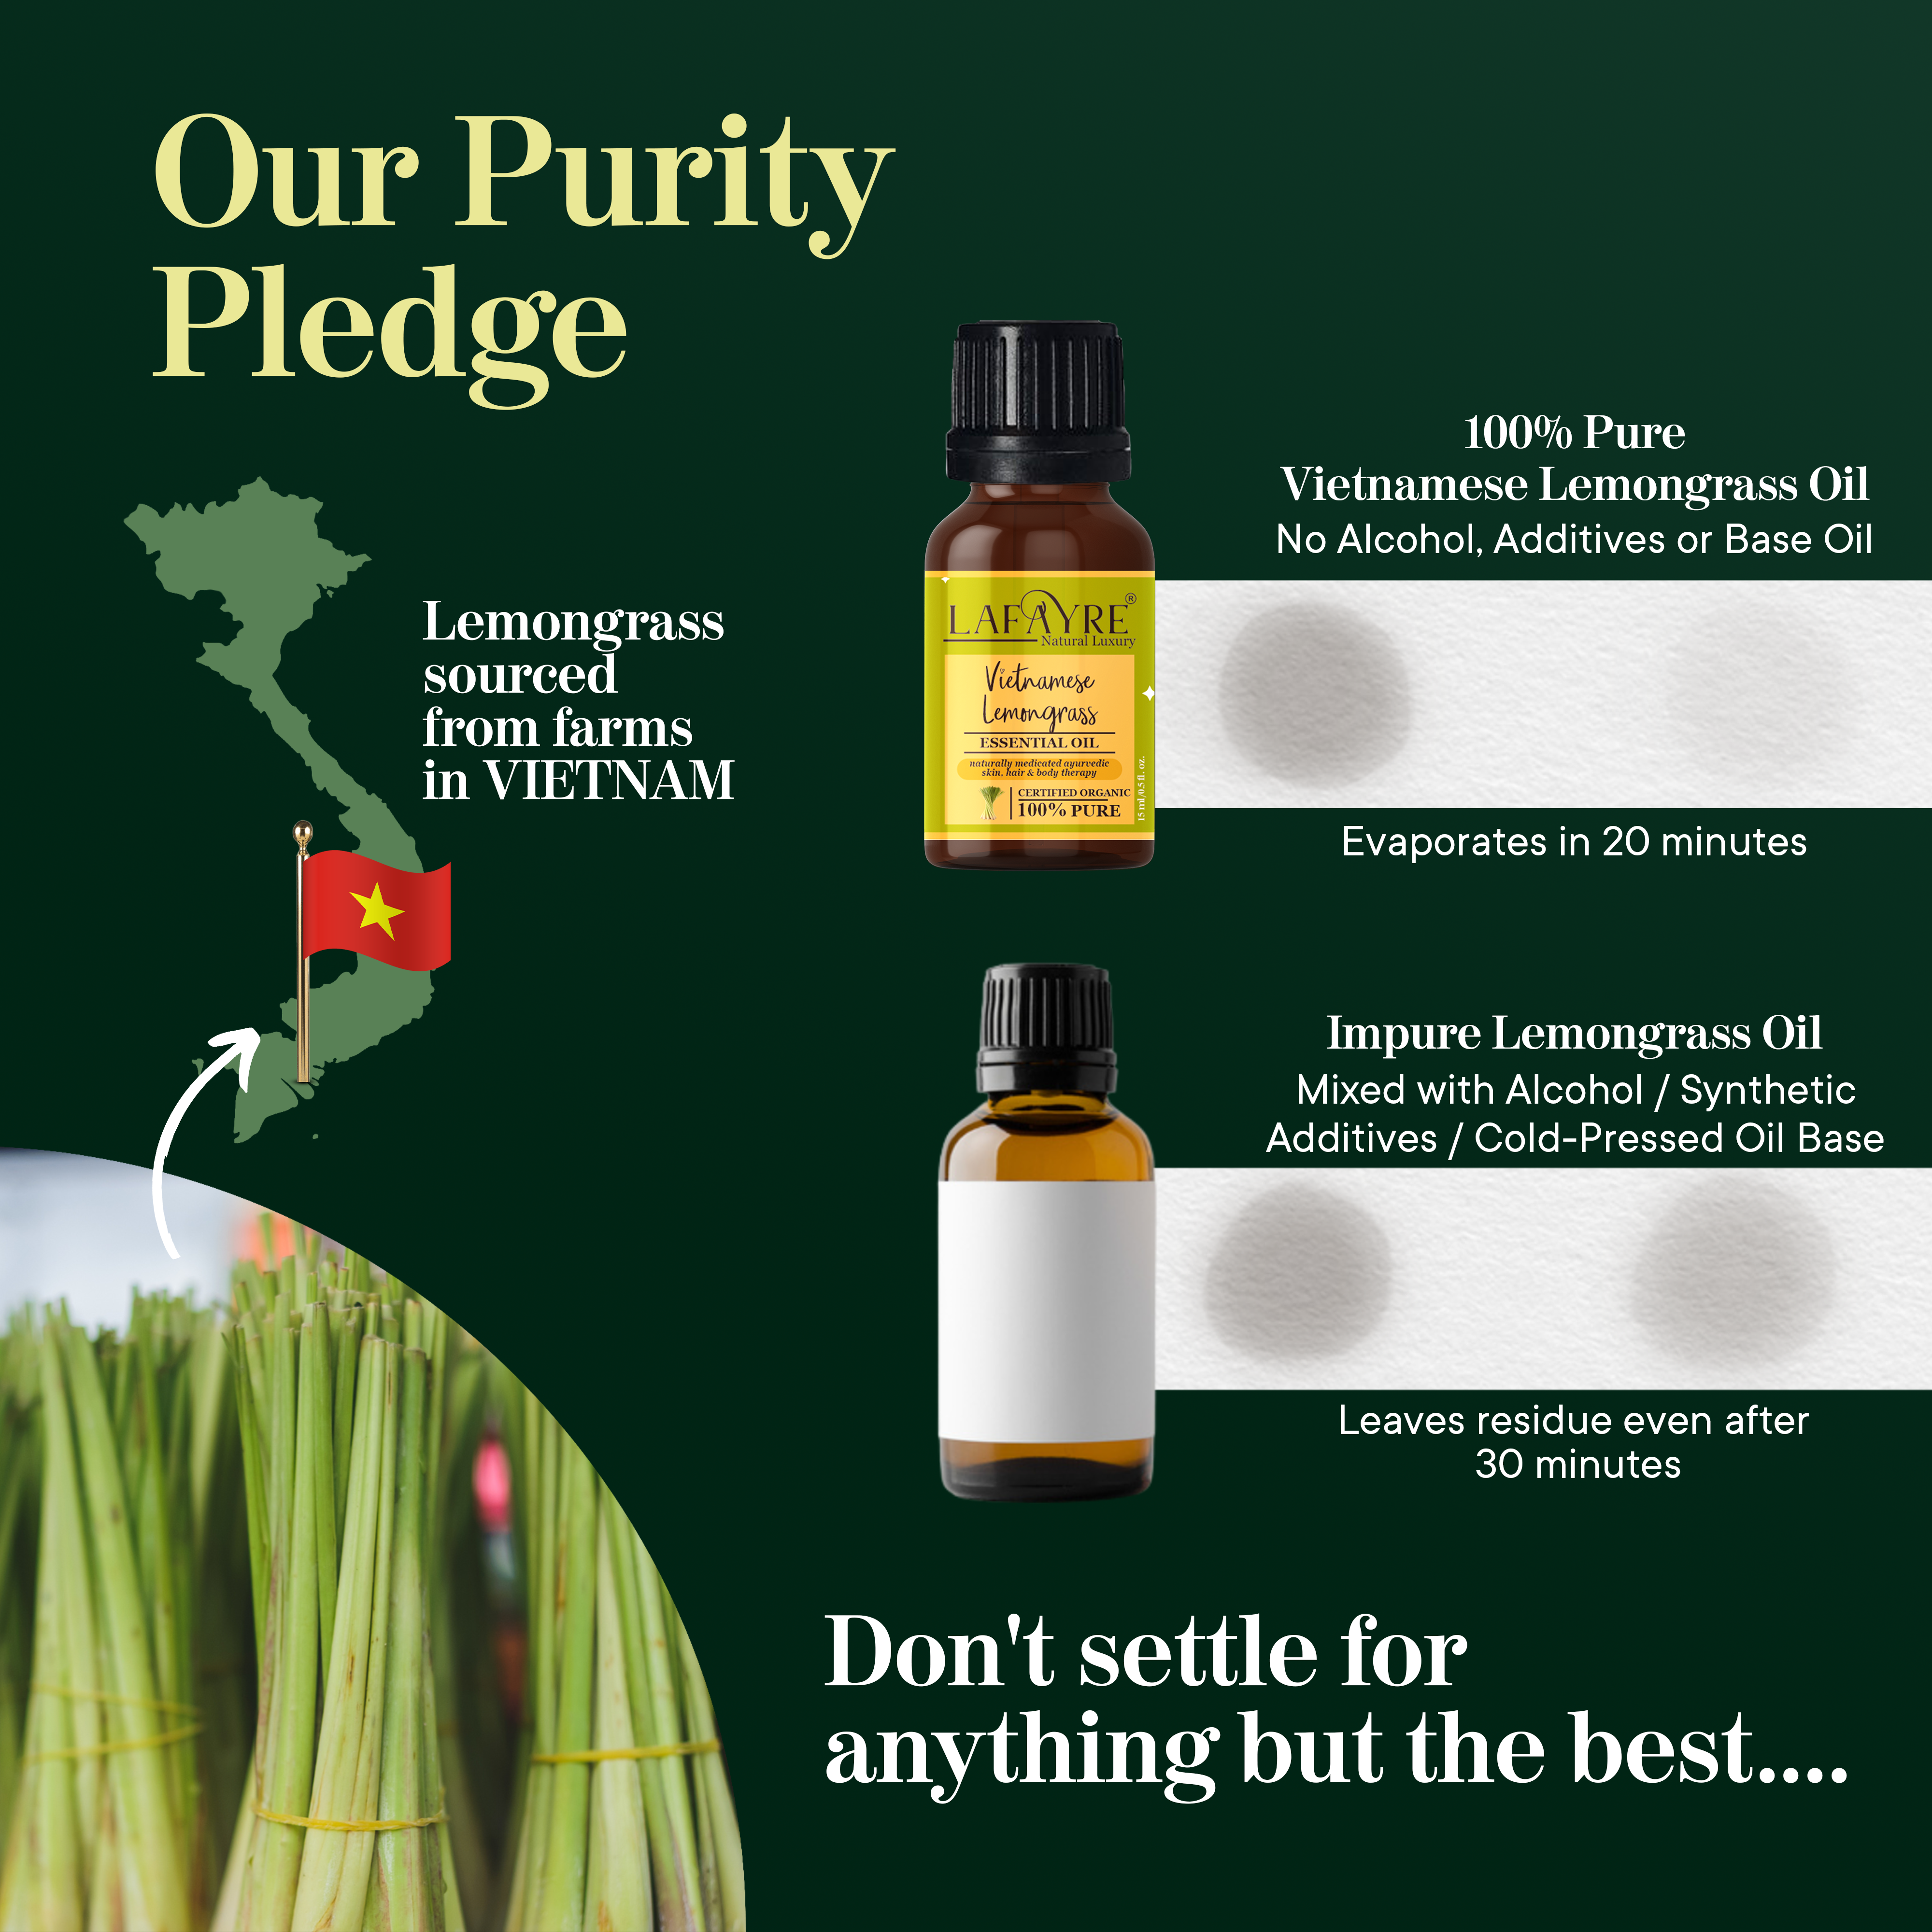  Lemongrass Essential Oil pledge Pledge